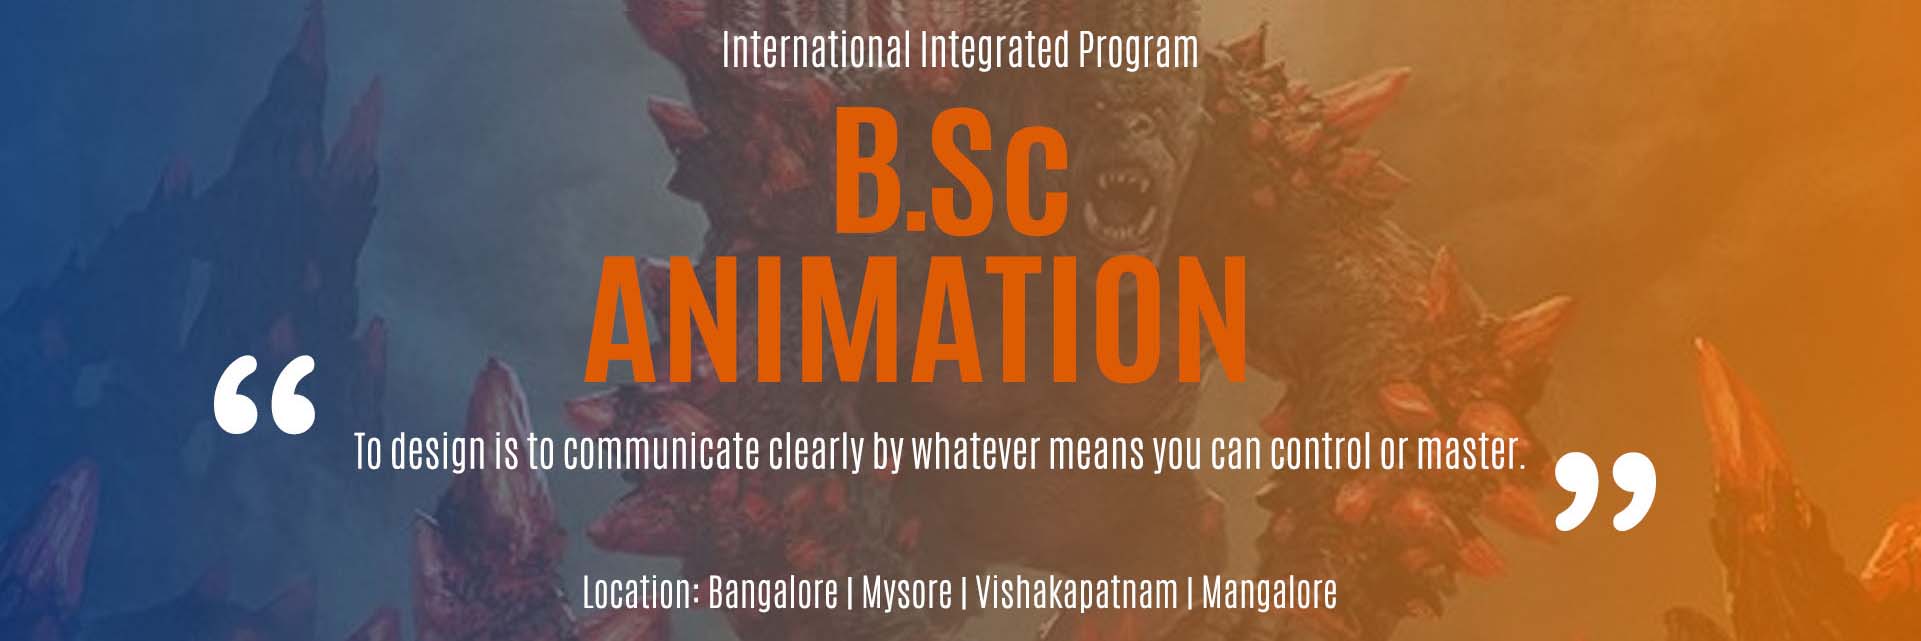 bsc_animation_multimedia